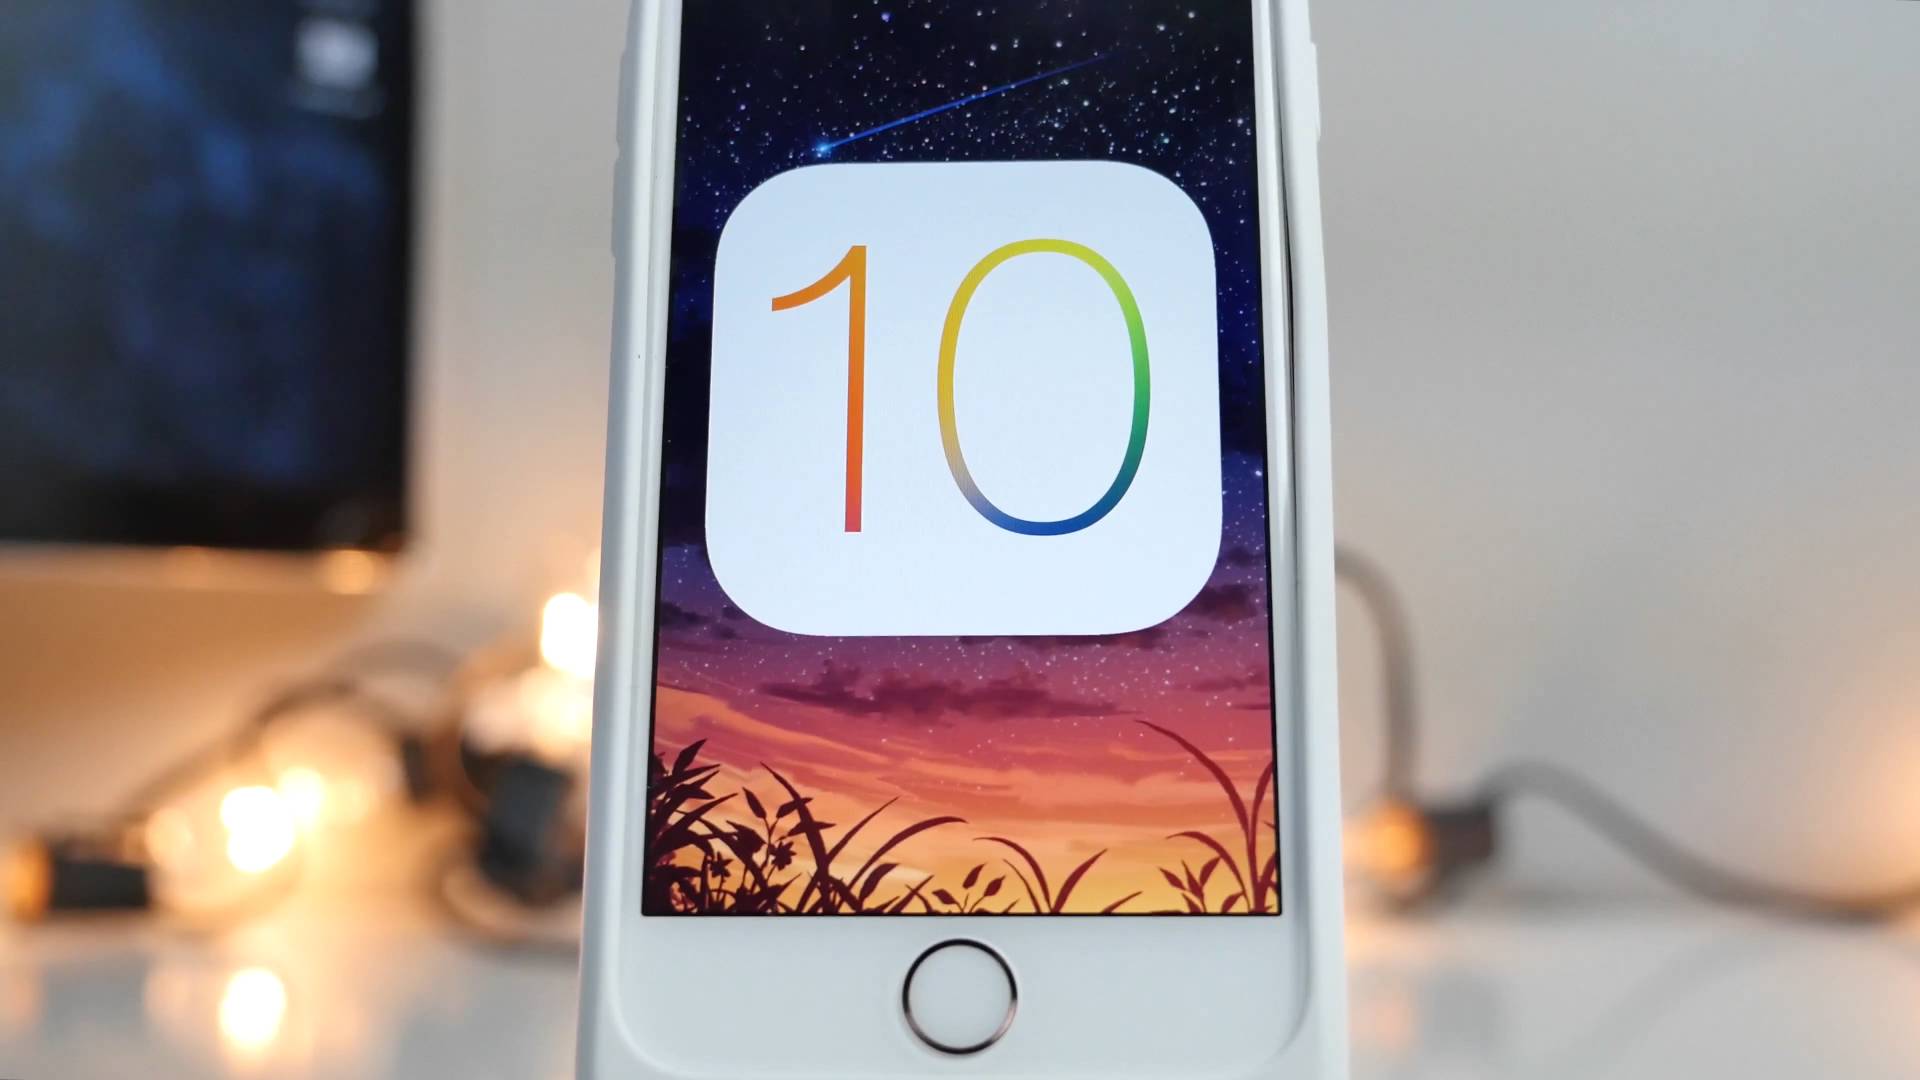 ios 10 wallpaper,iphone,elektronik,technologie,gadget,smartphone